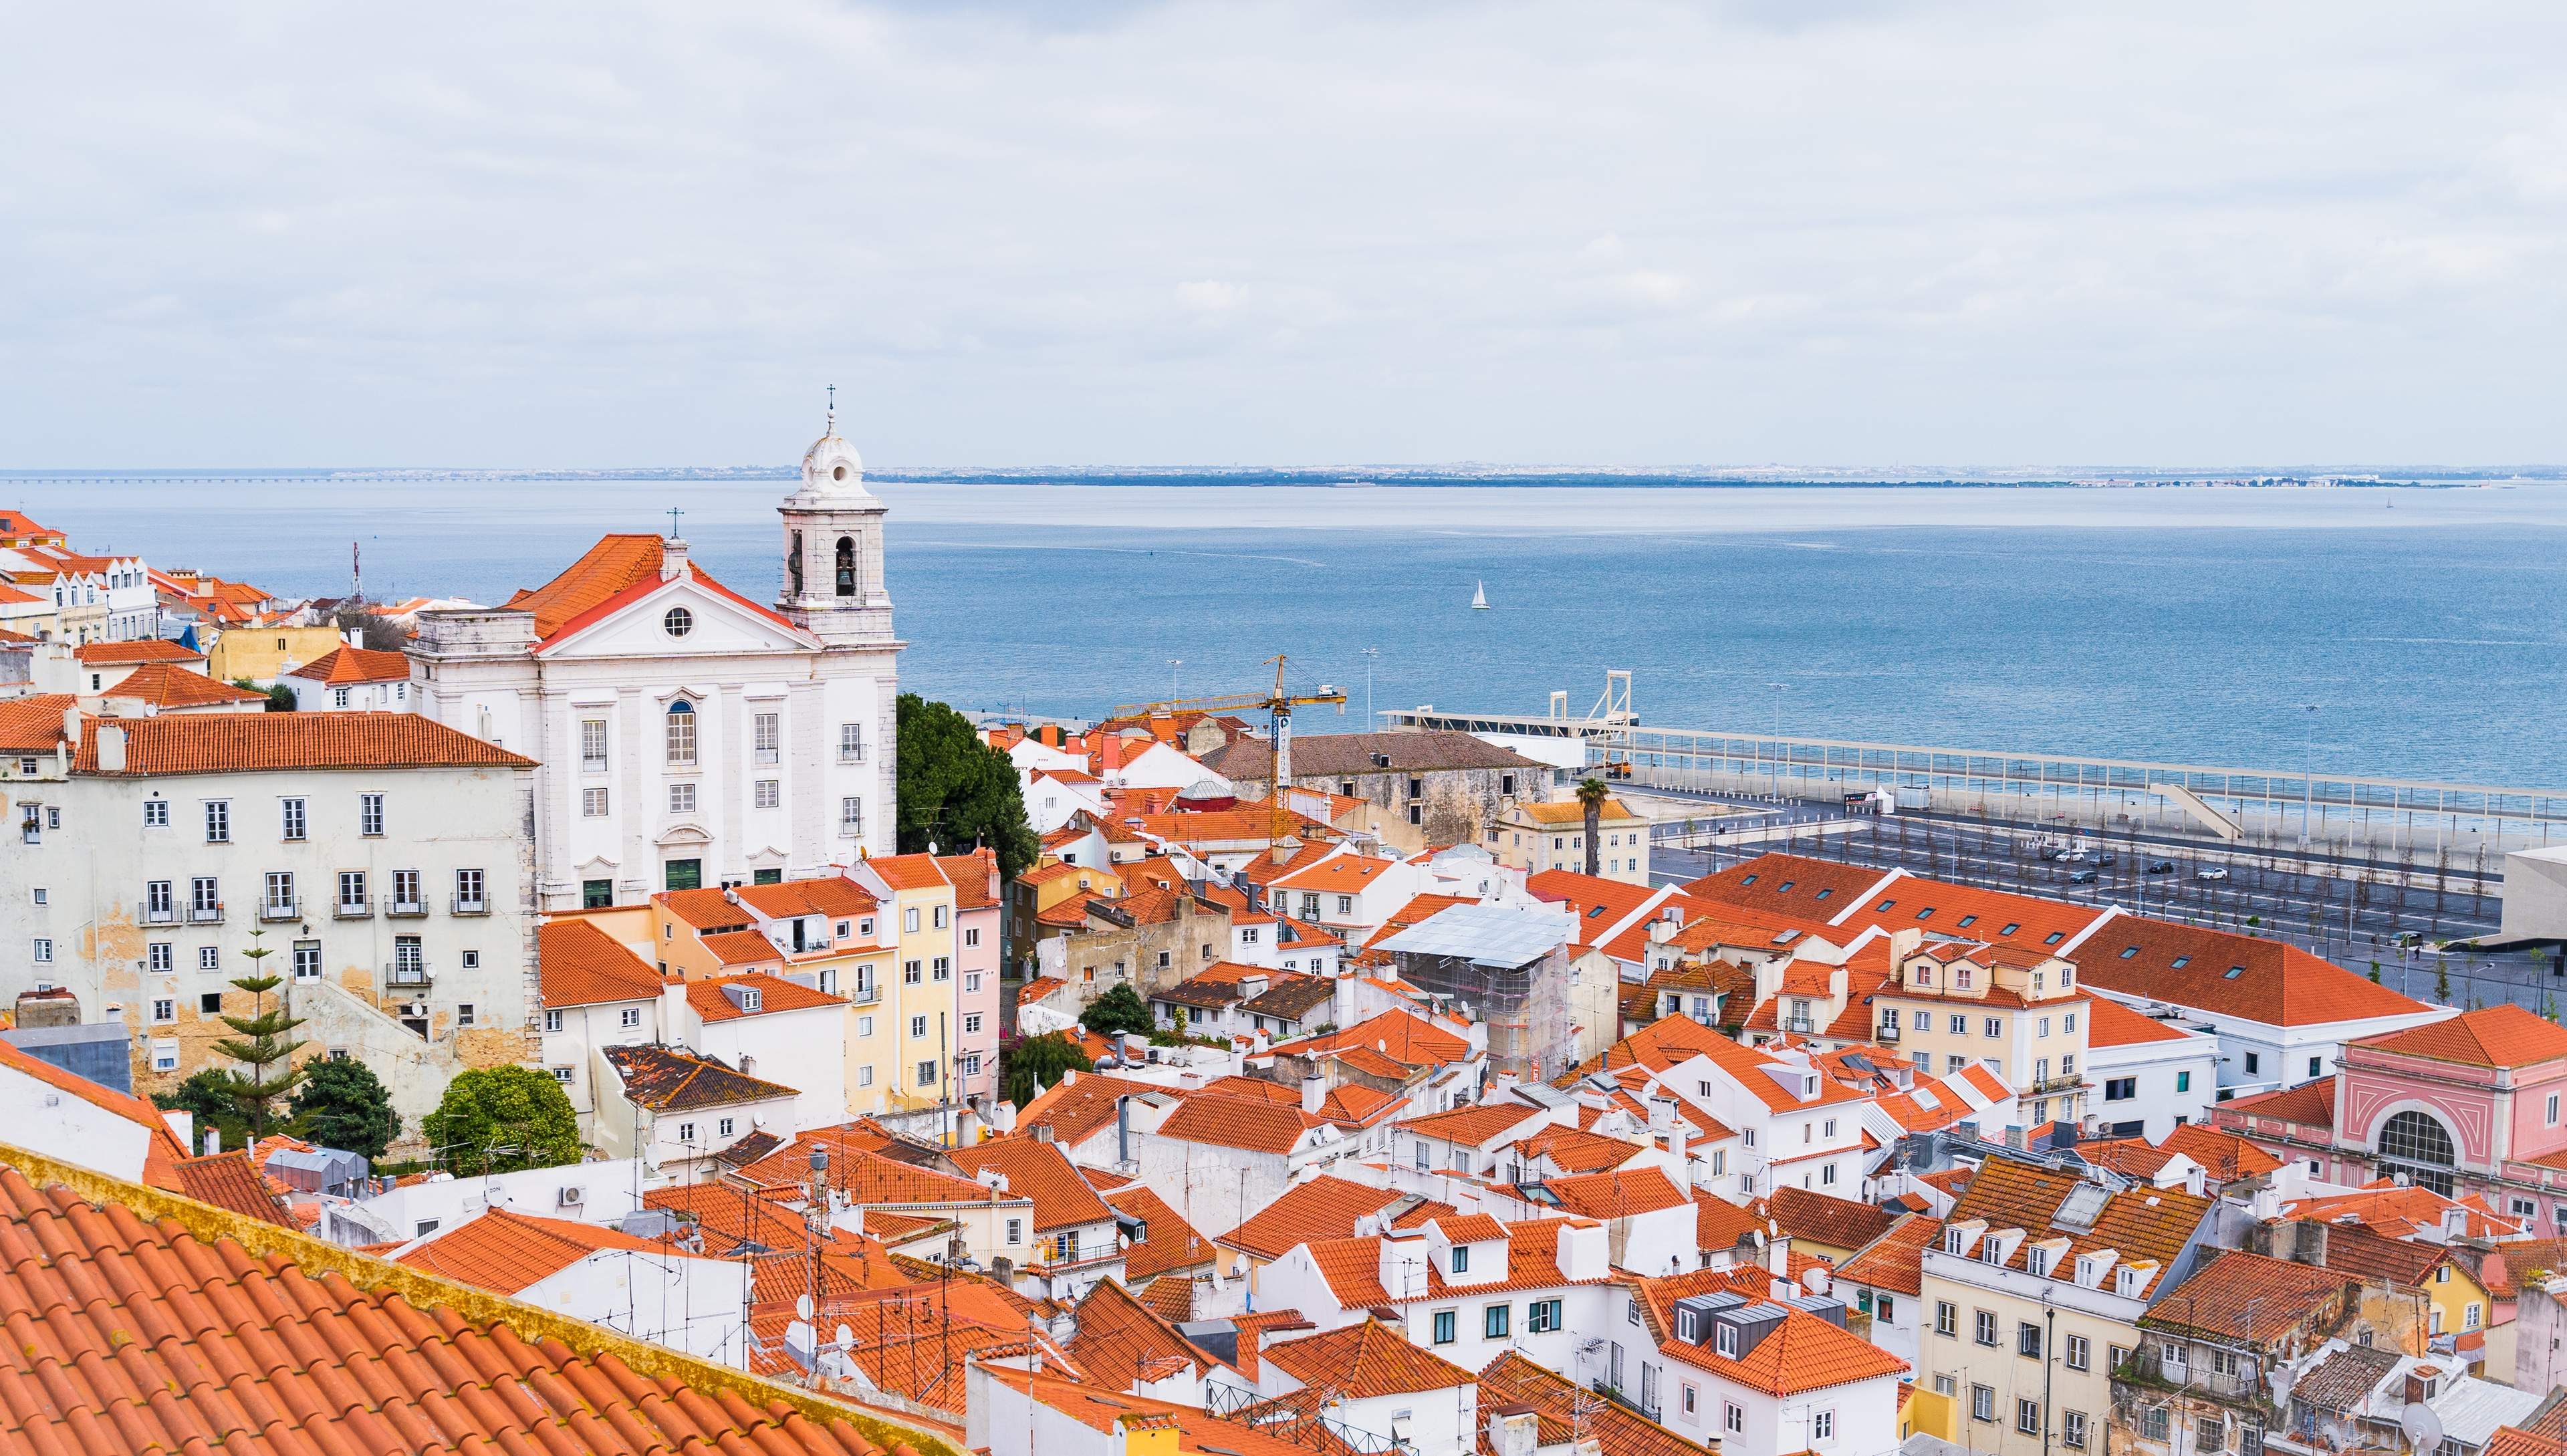 The view from Miradouro de Santa Luzia, Lisbon, Portugal